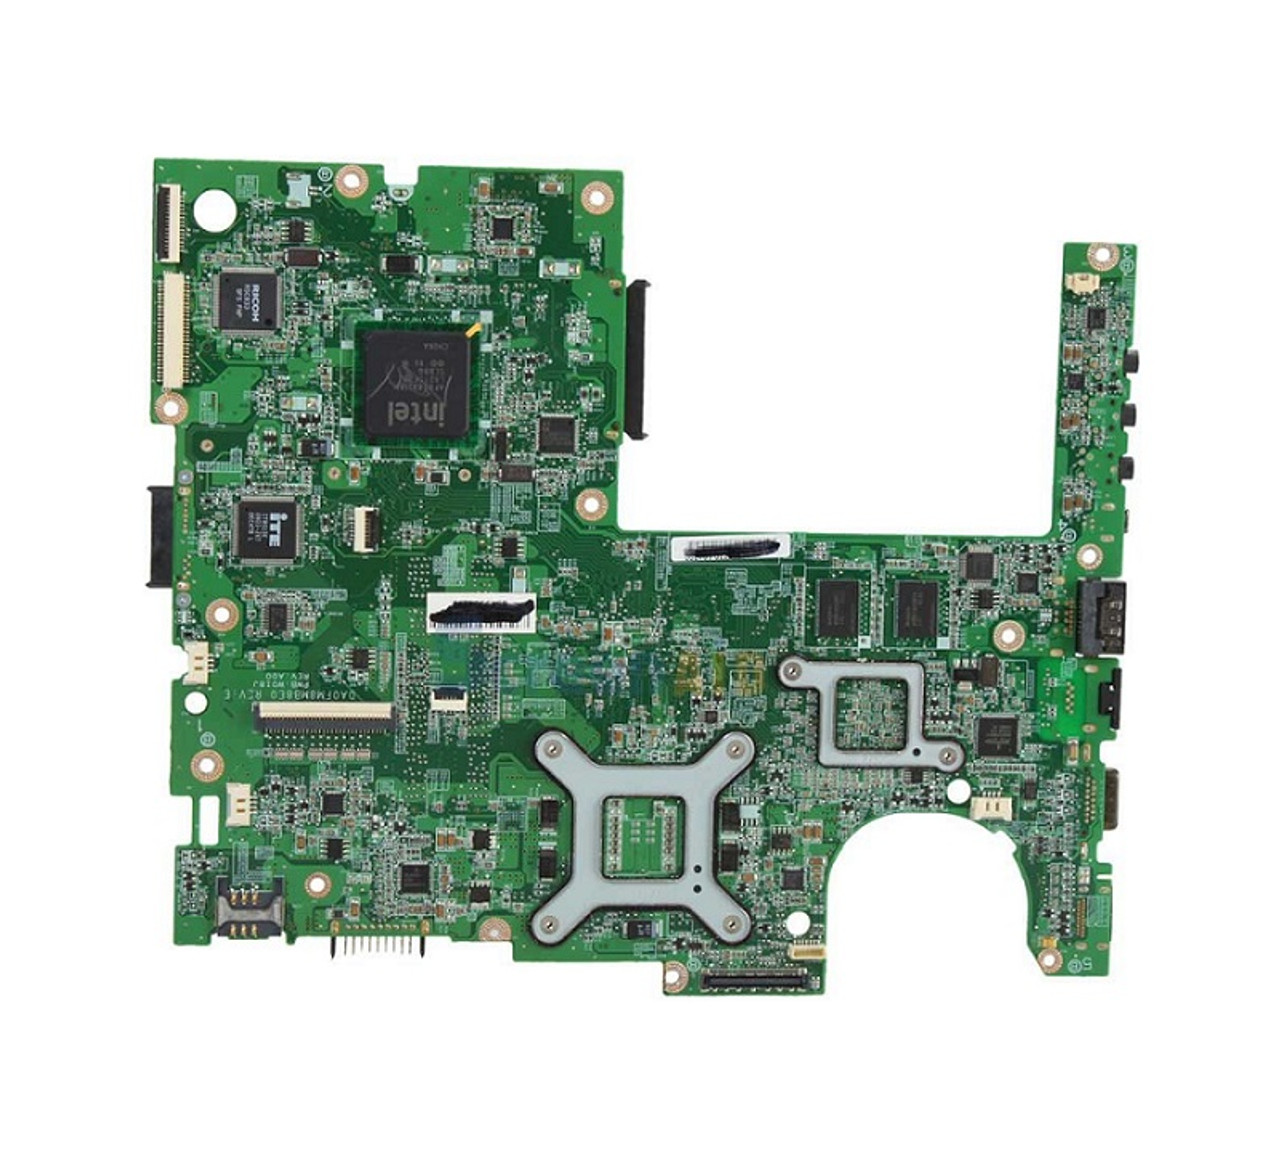 682171-001 - HP System Board 630m/2GB DDR3 for Pavilion Dv6-7000 Series Intel Laptop (Refurbished)